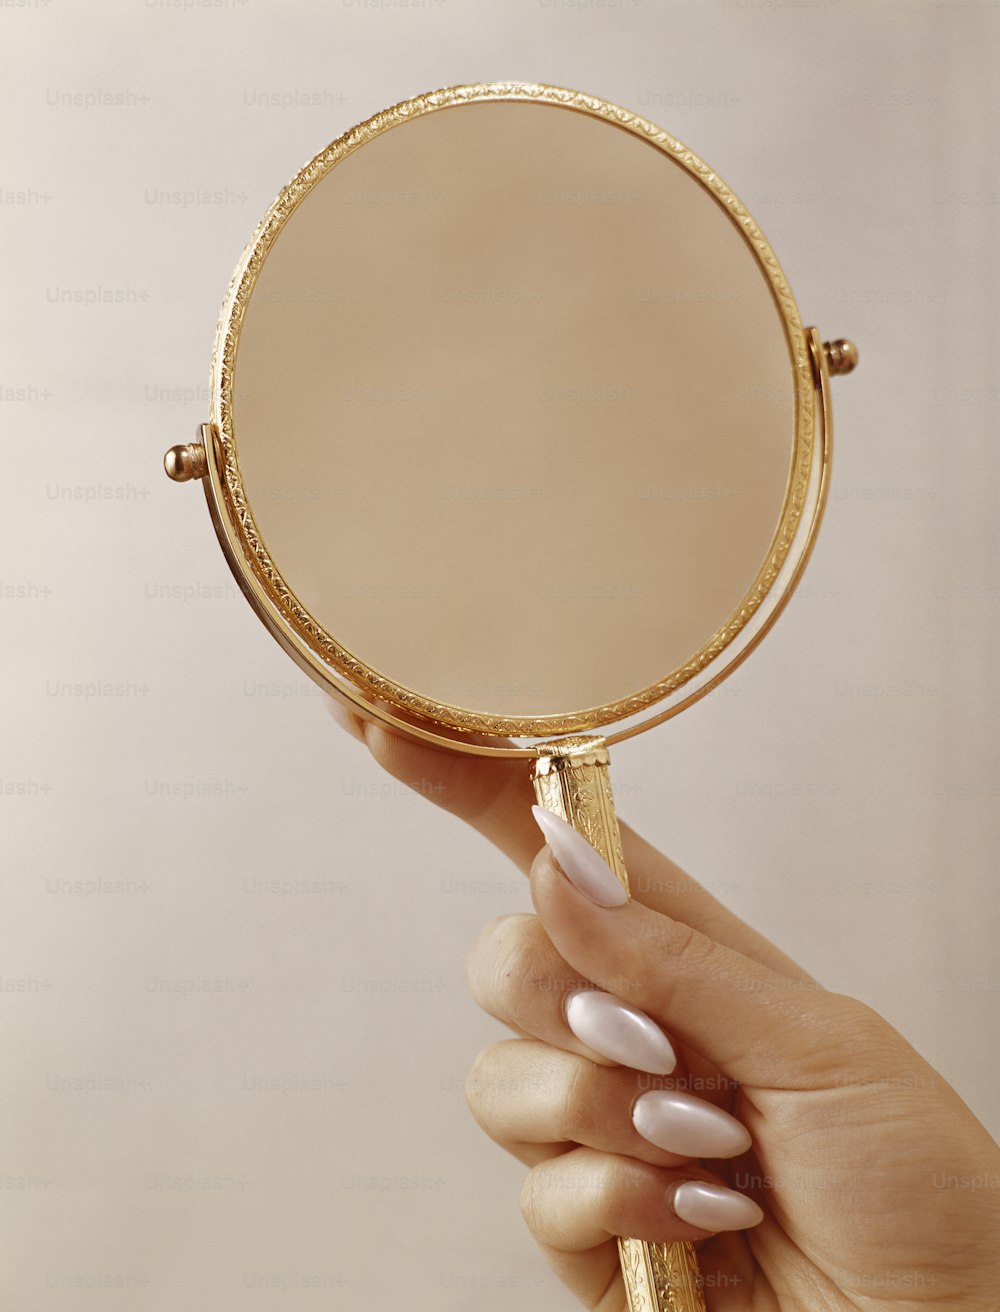 una persona sosteniendo un espejo con la mano